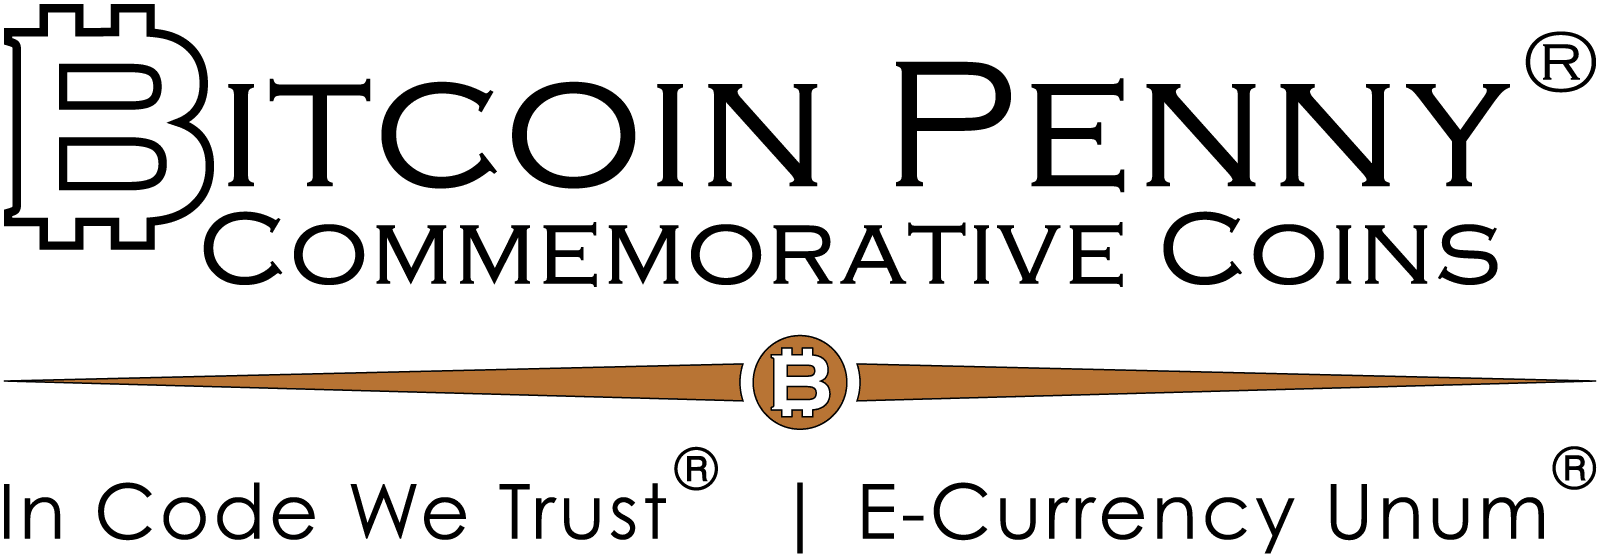 Bitcoin Penny Commemorative Coins